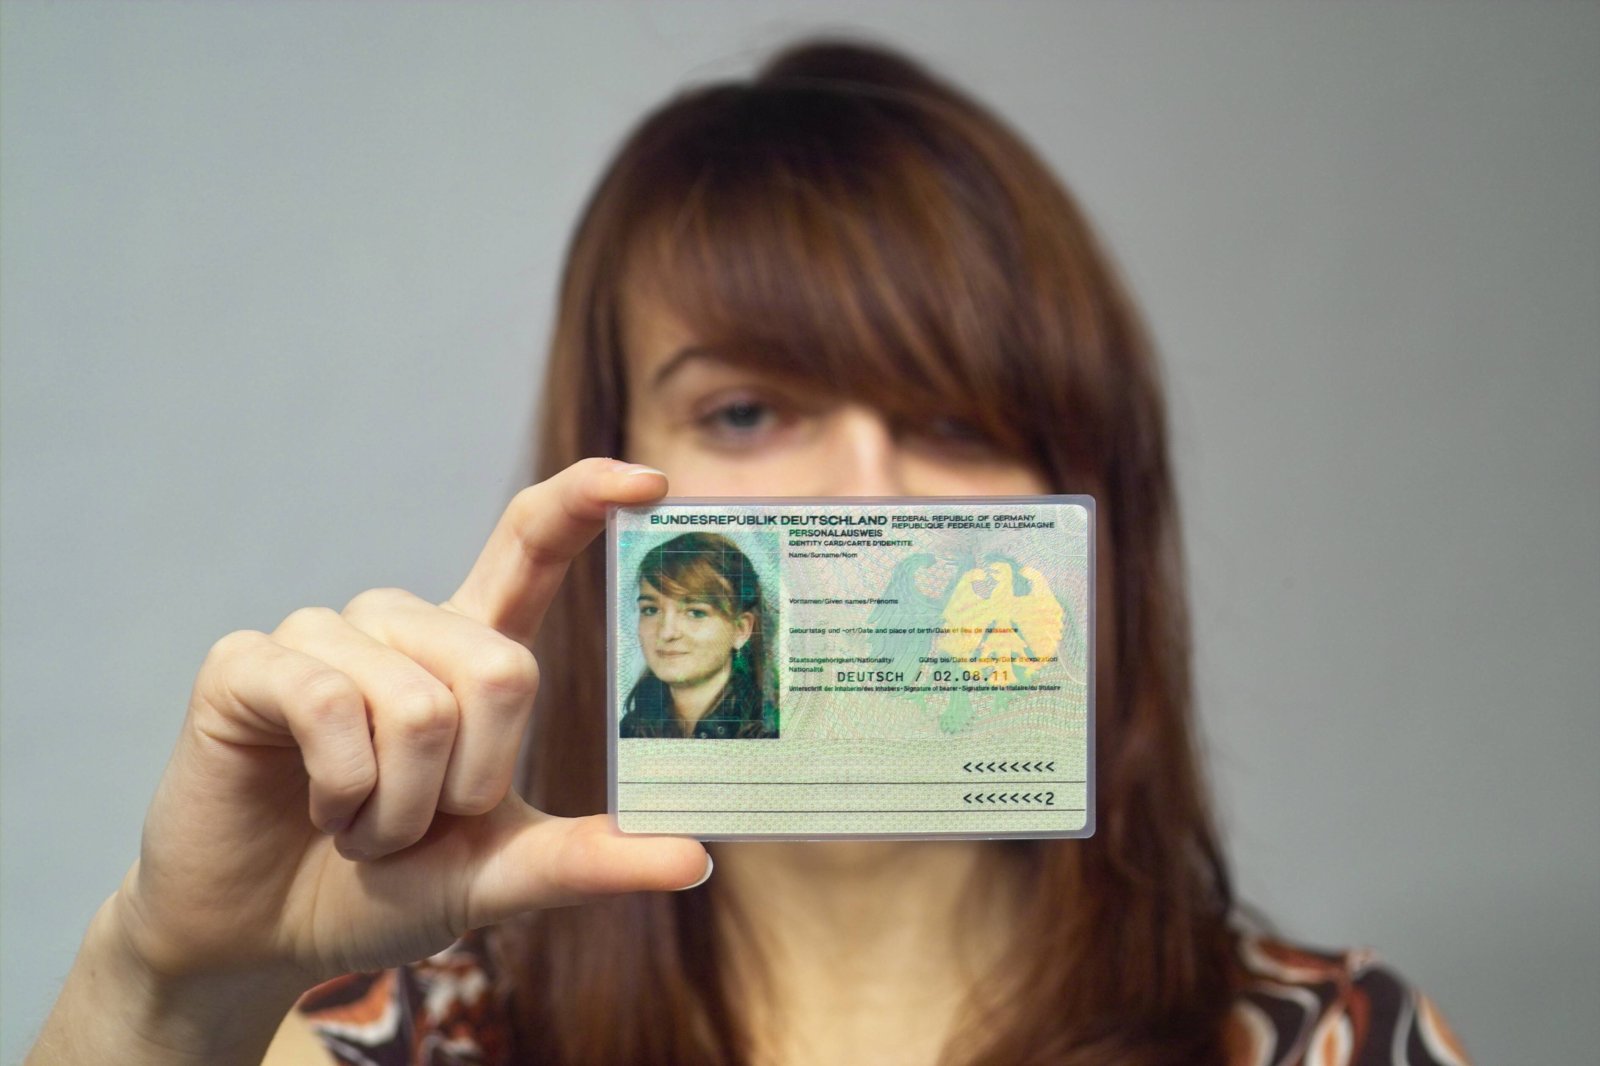 Deutscher personalausweis fake